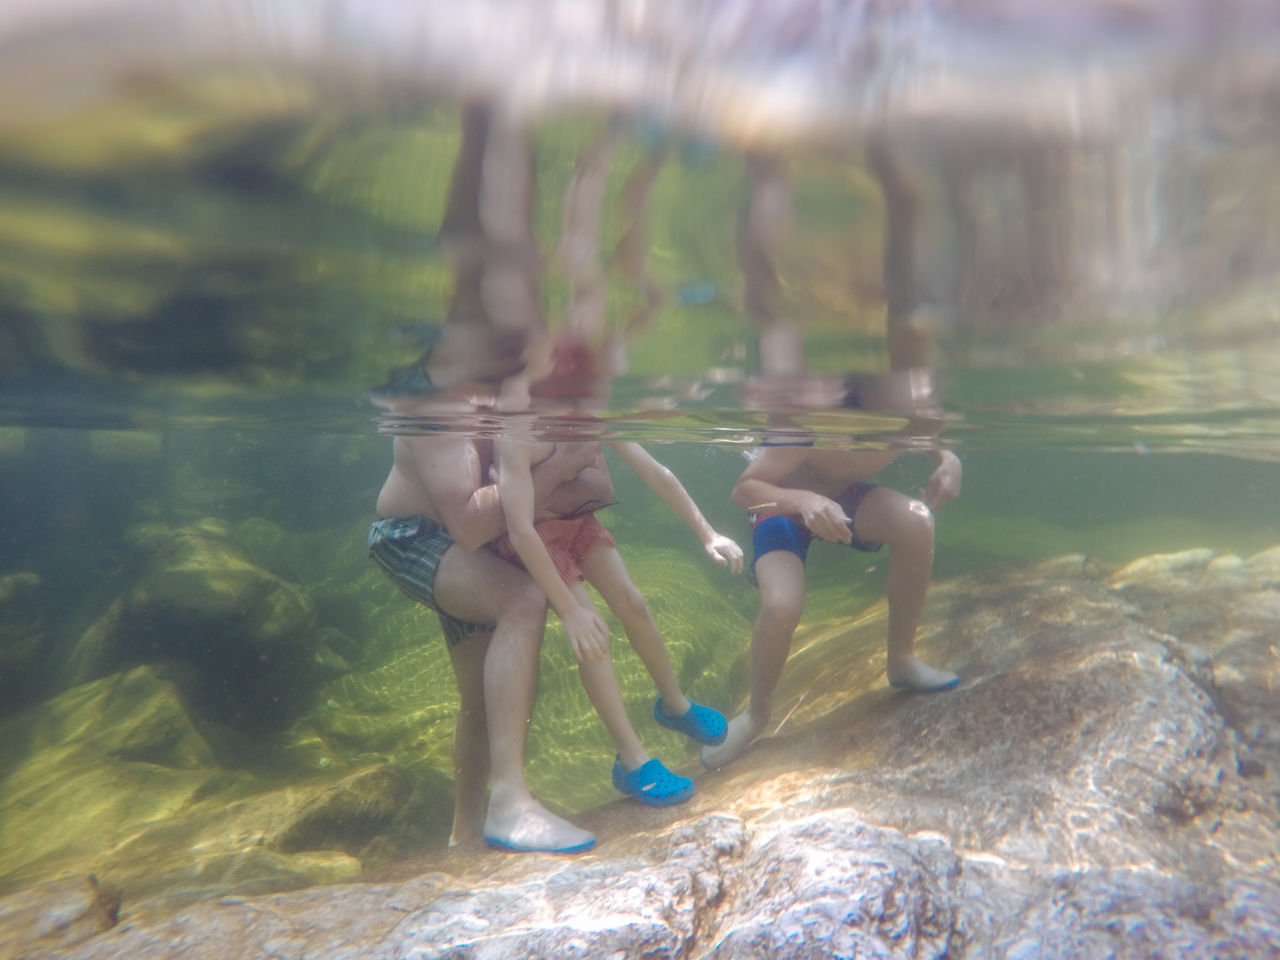 Legs of three people standing in water